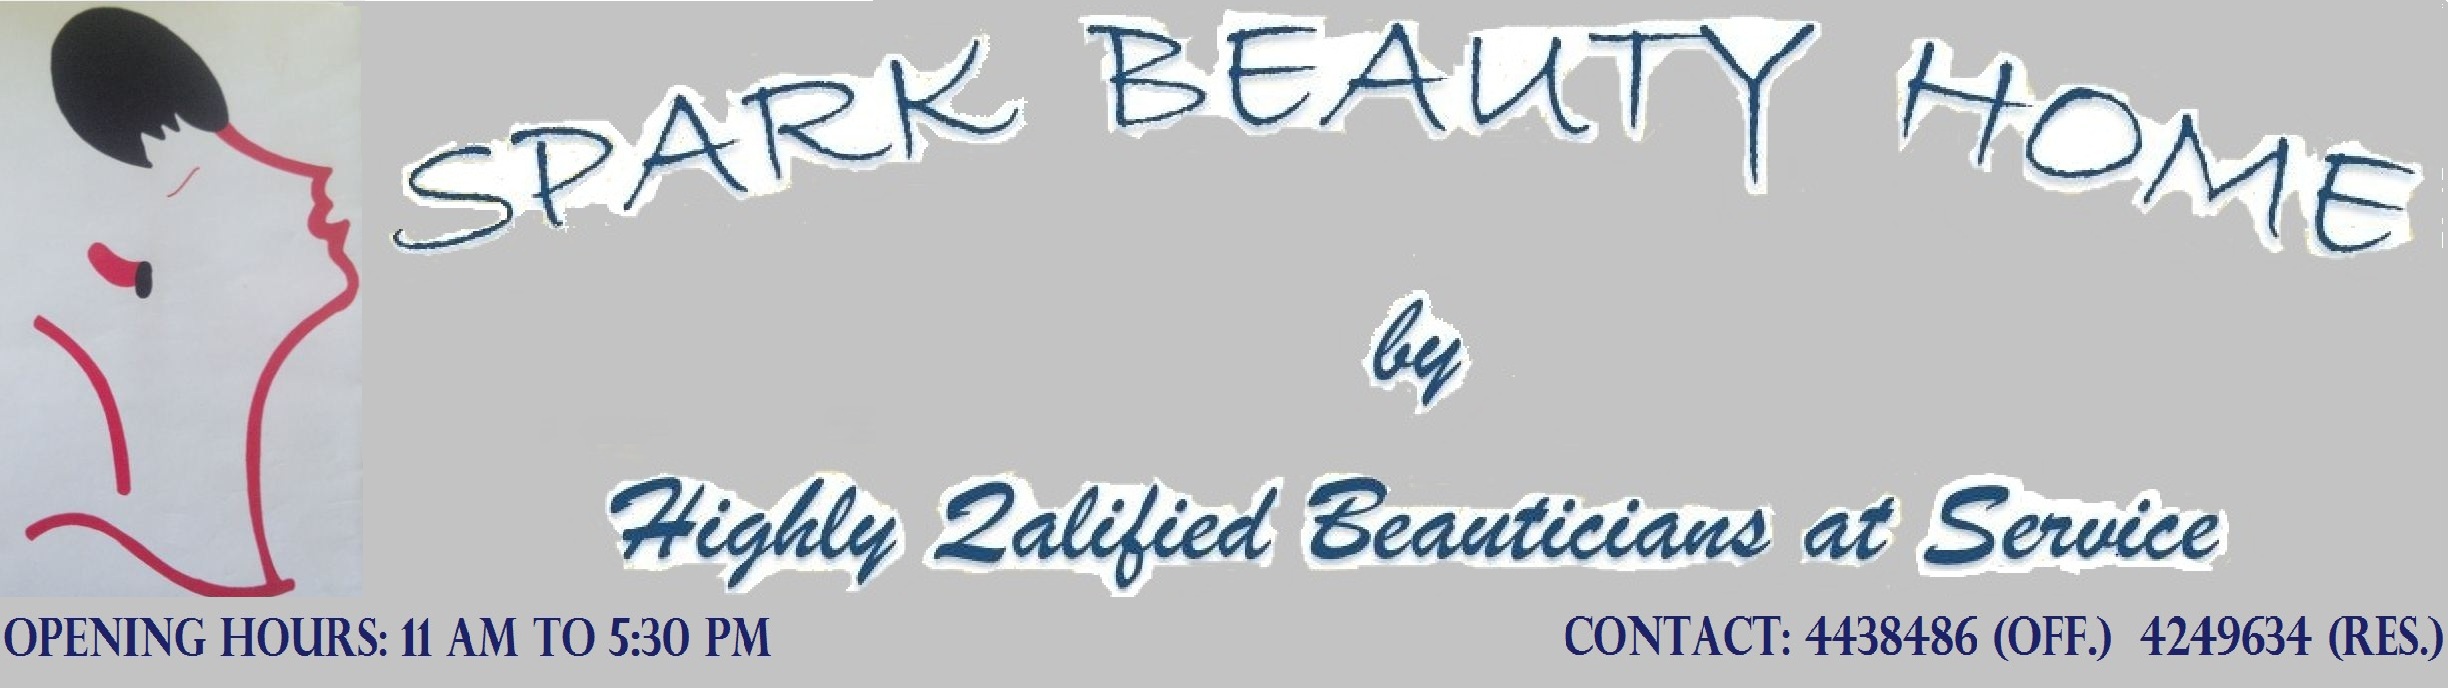 spark beauty home logo